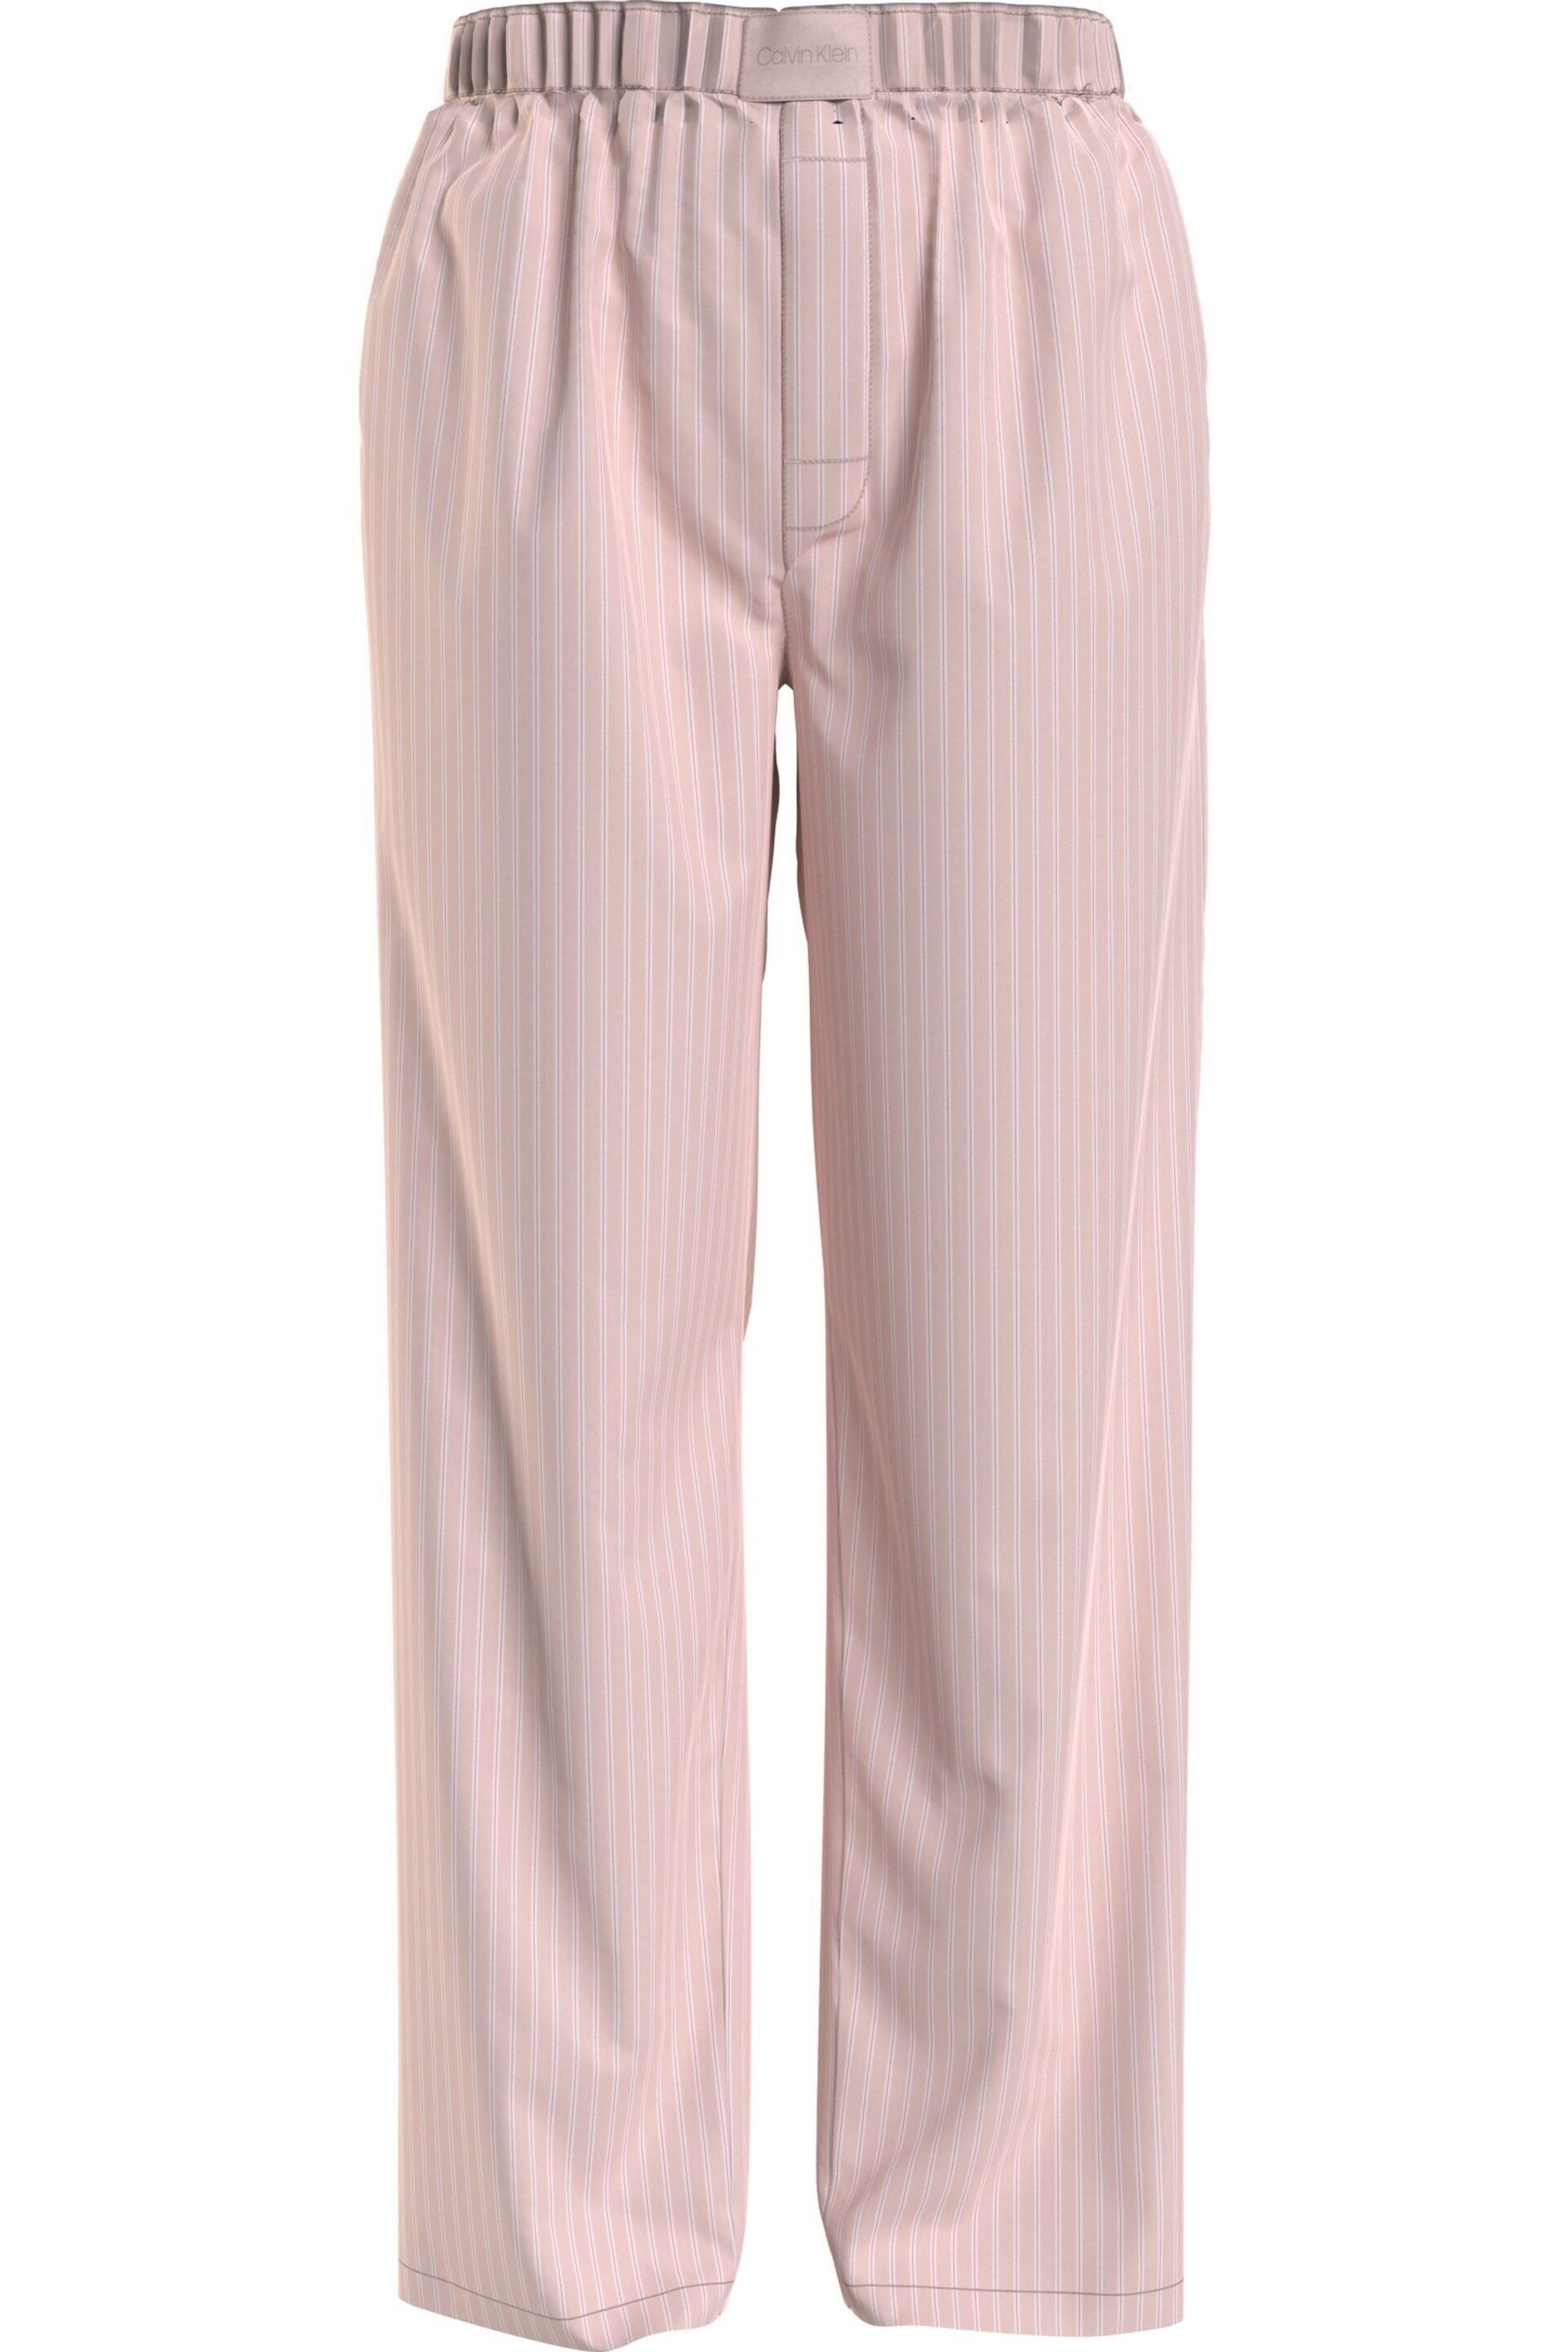 Calvin Klein Pink Stripe Single Trousers - Image 4 of 5